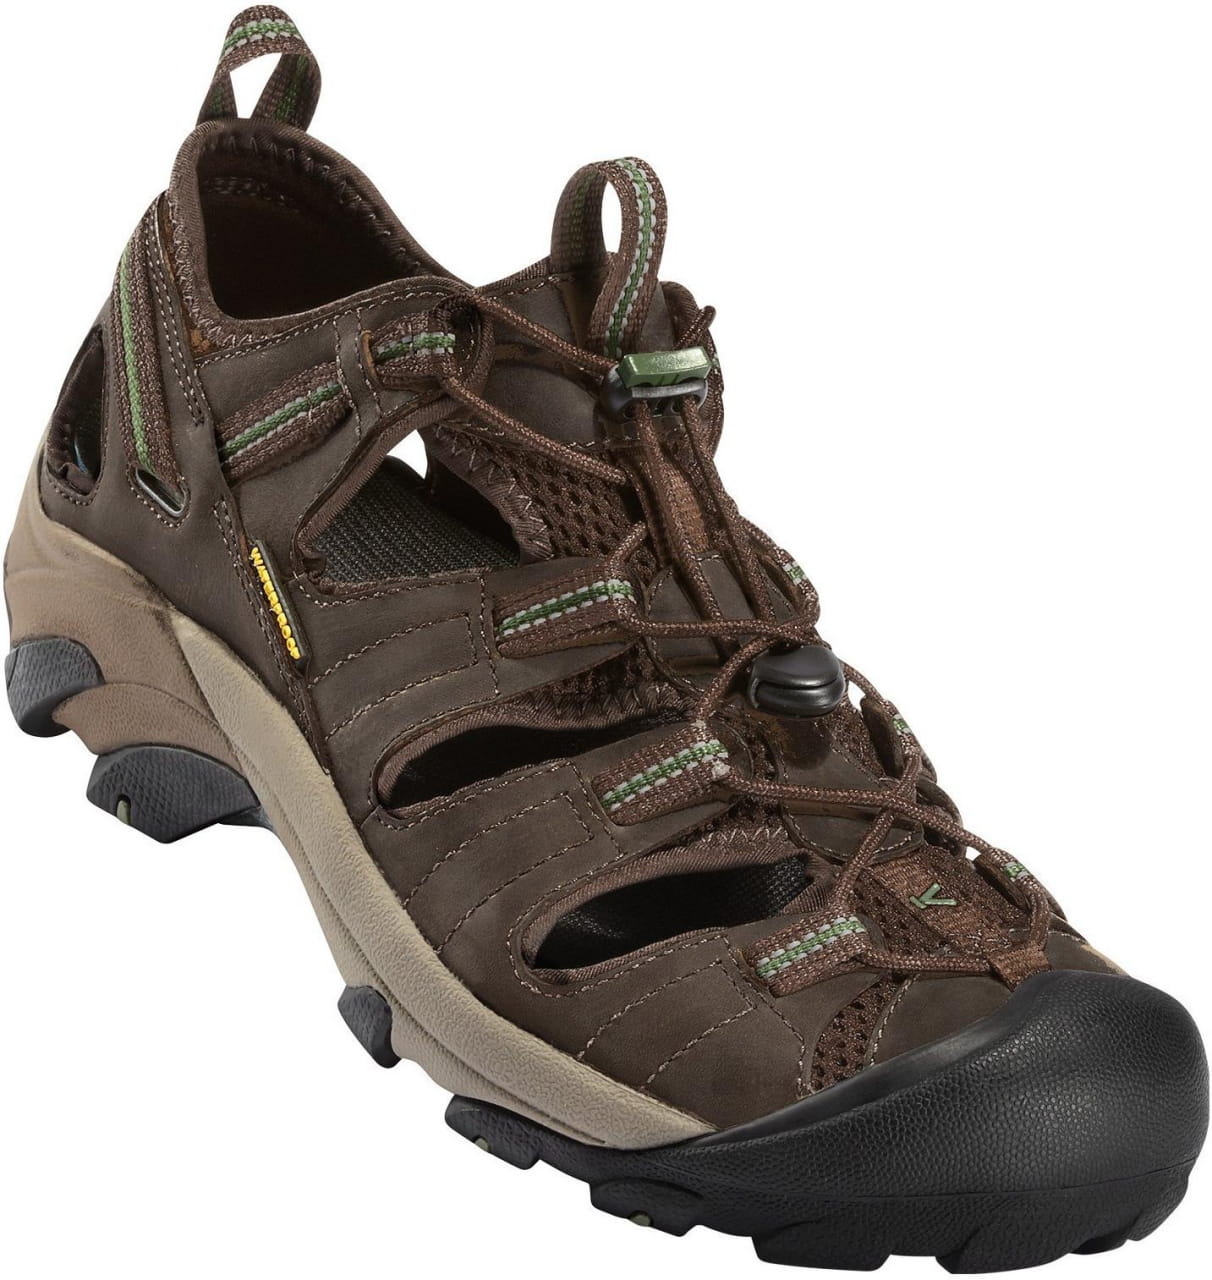 Outdoor-Schuhe für Männer  Keen Arroyo II M